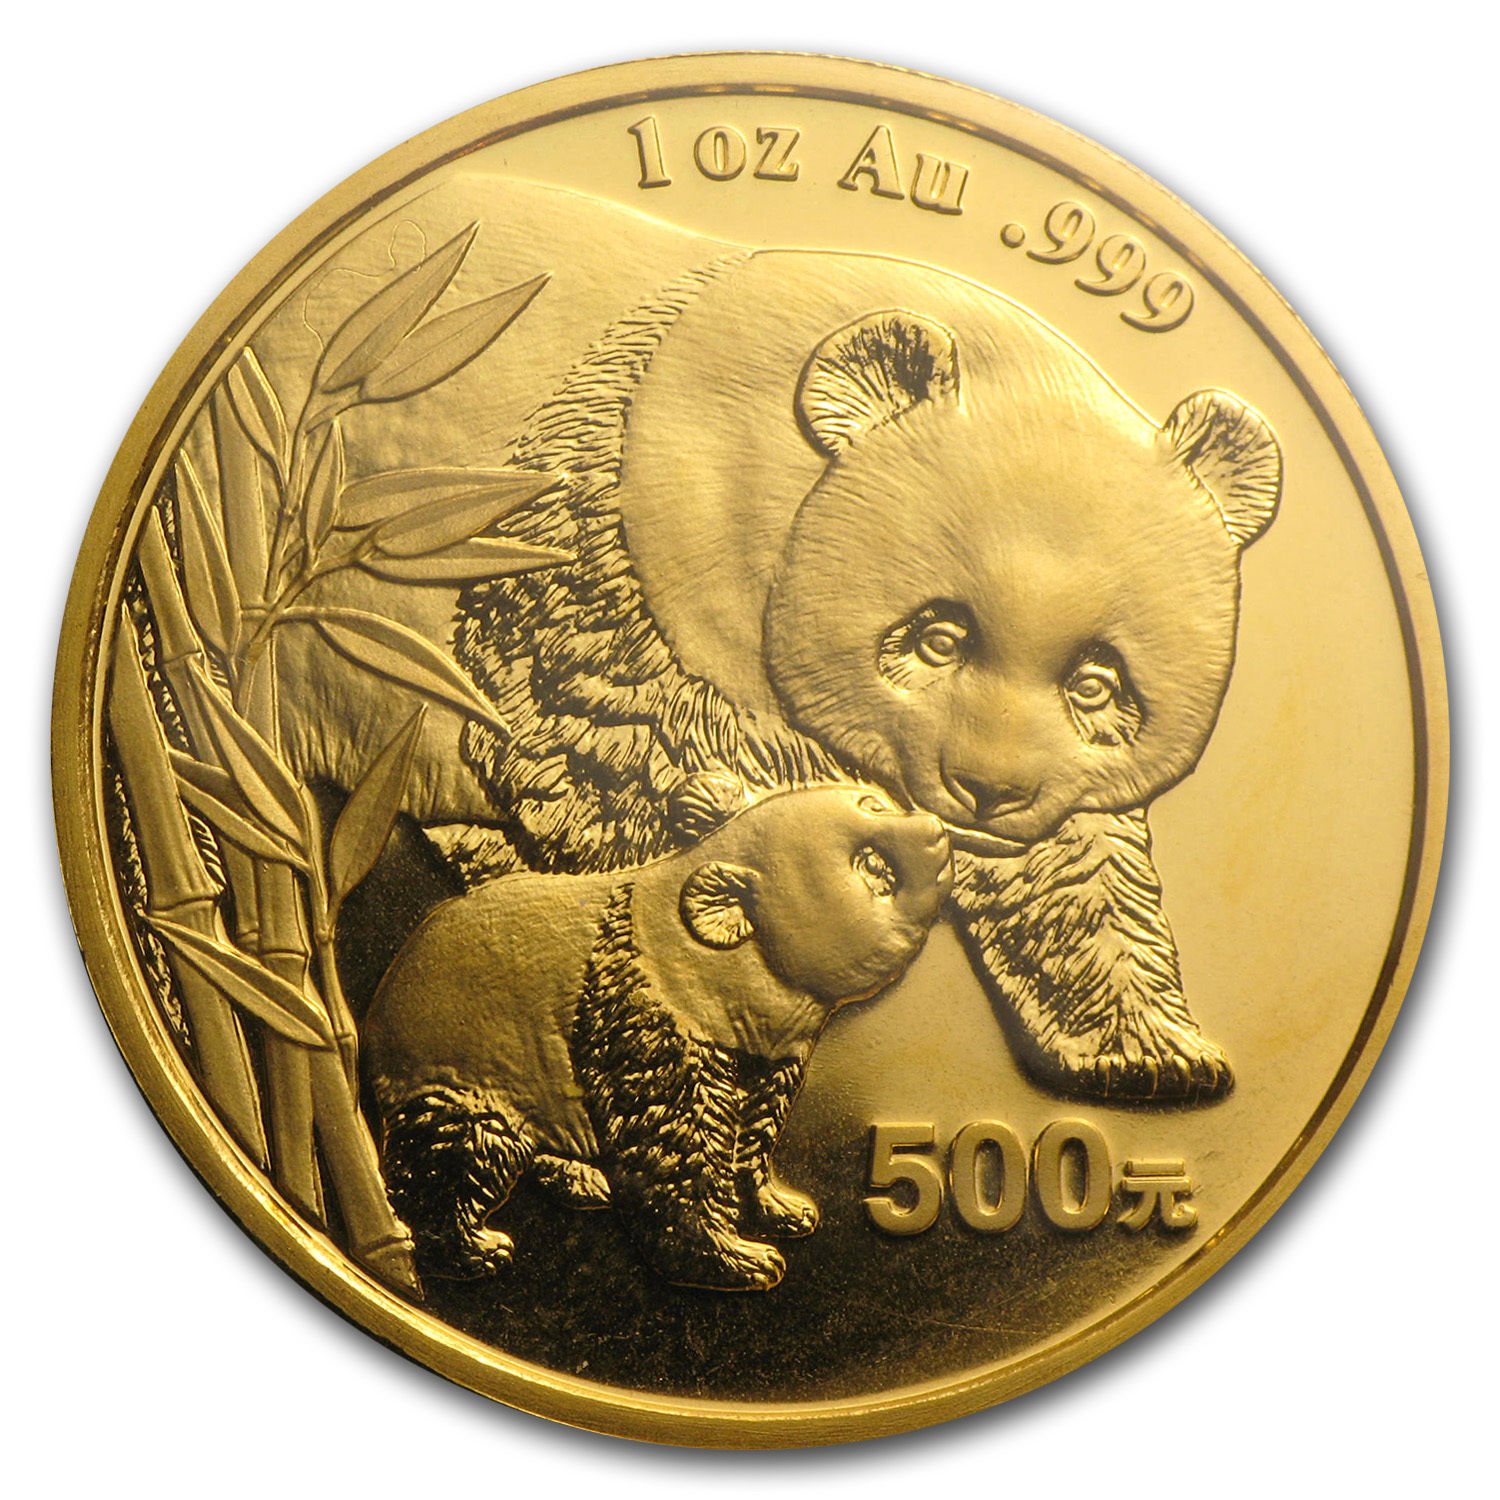 2004 China 1 oz Gold Panda BU (Sealed) - SKU #149